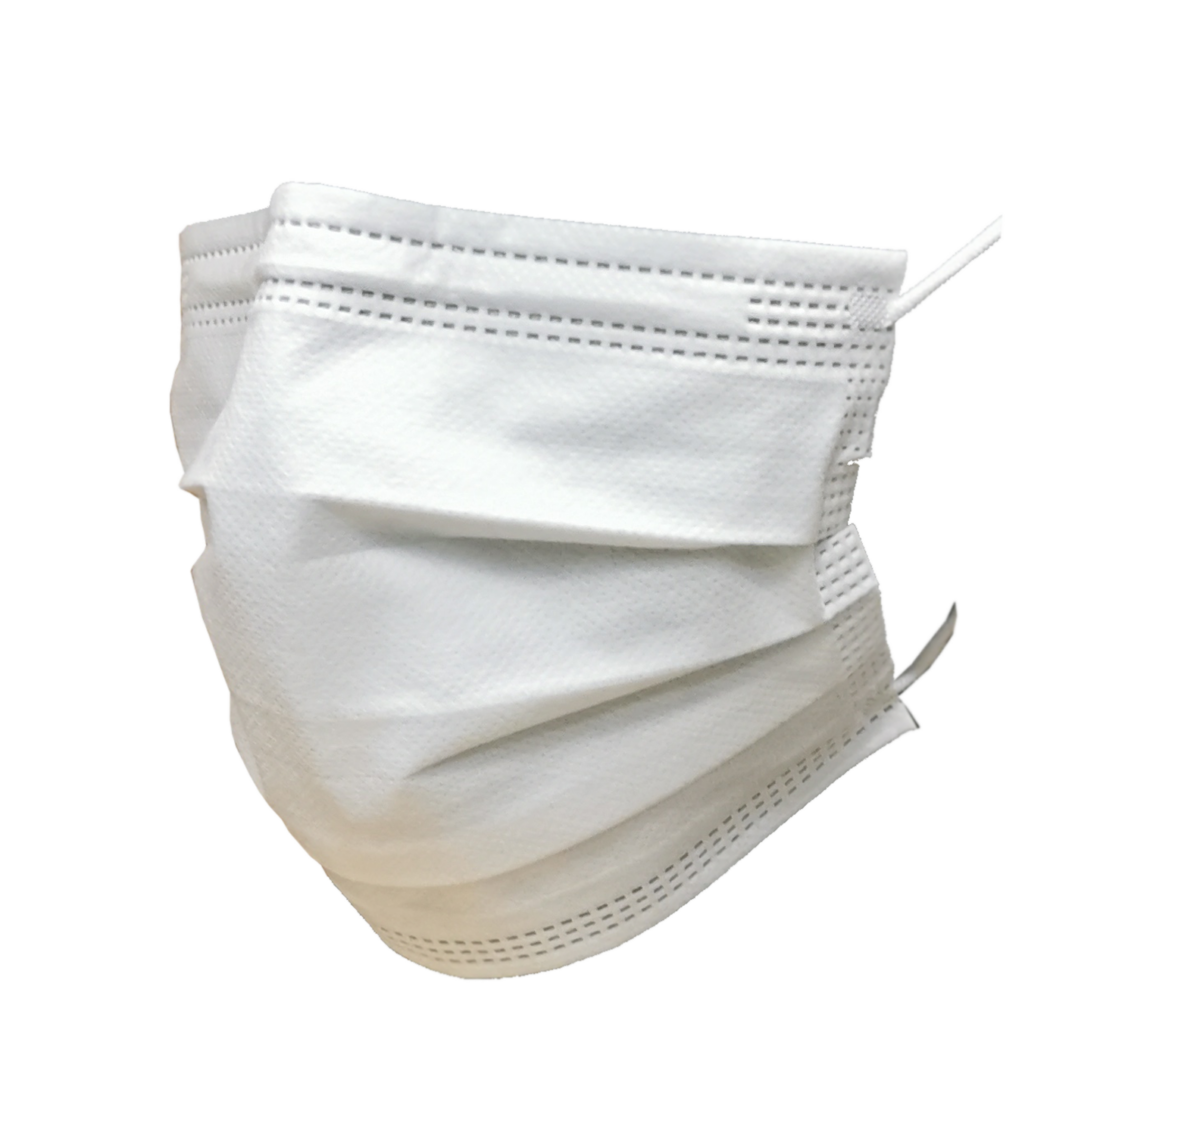 Protektum IIR munskydd "Extra comfort", färg vit, 50-pack